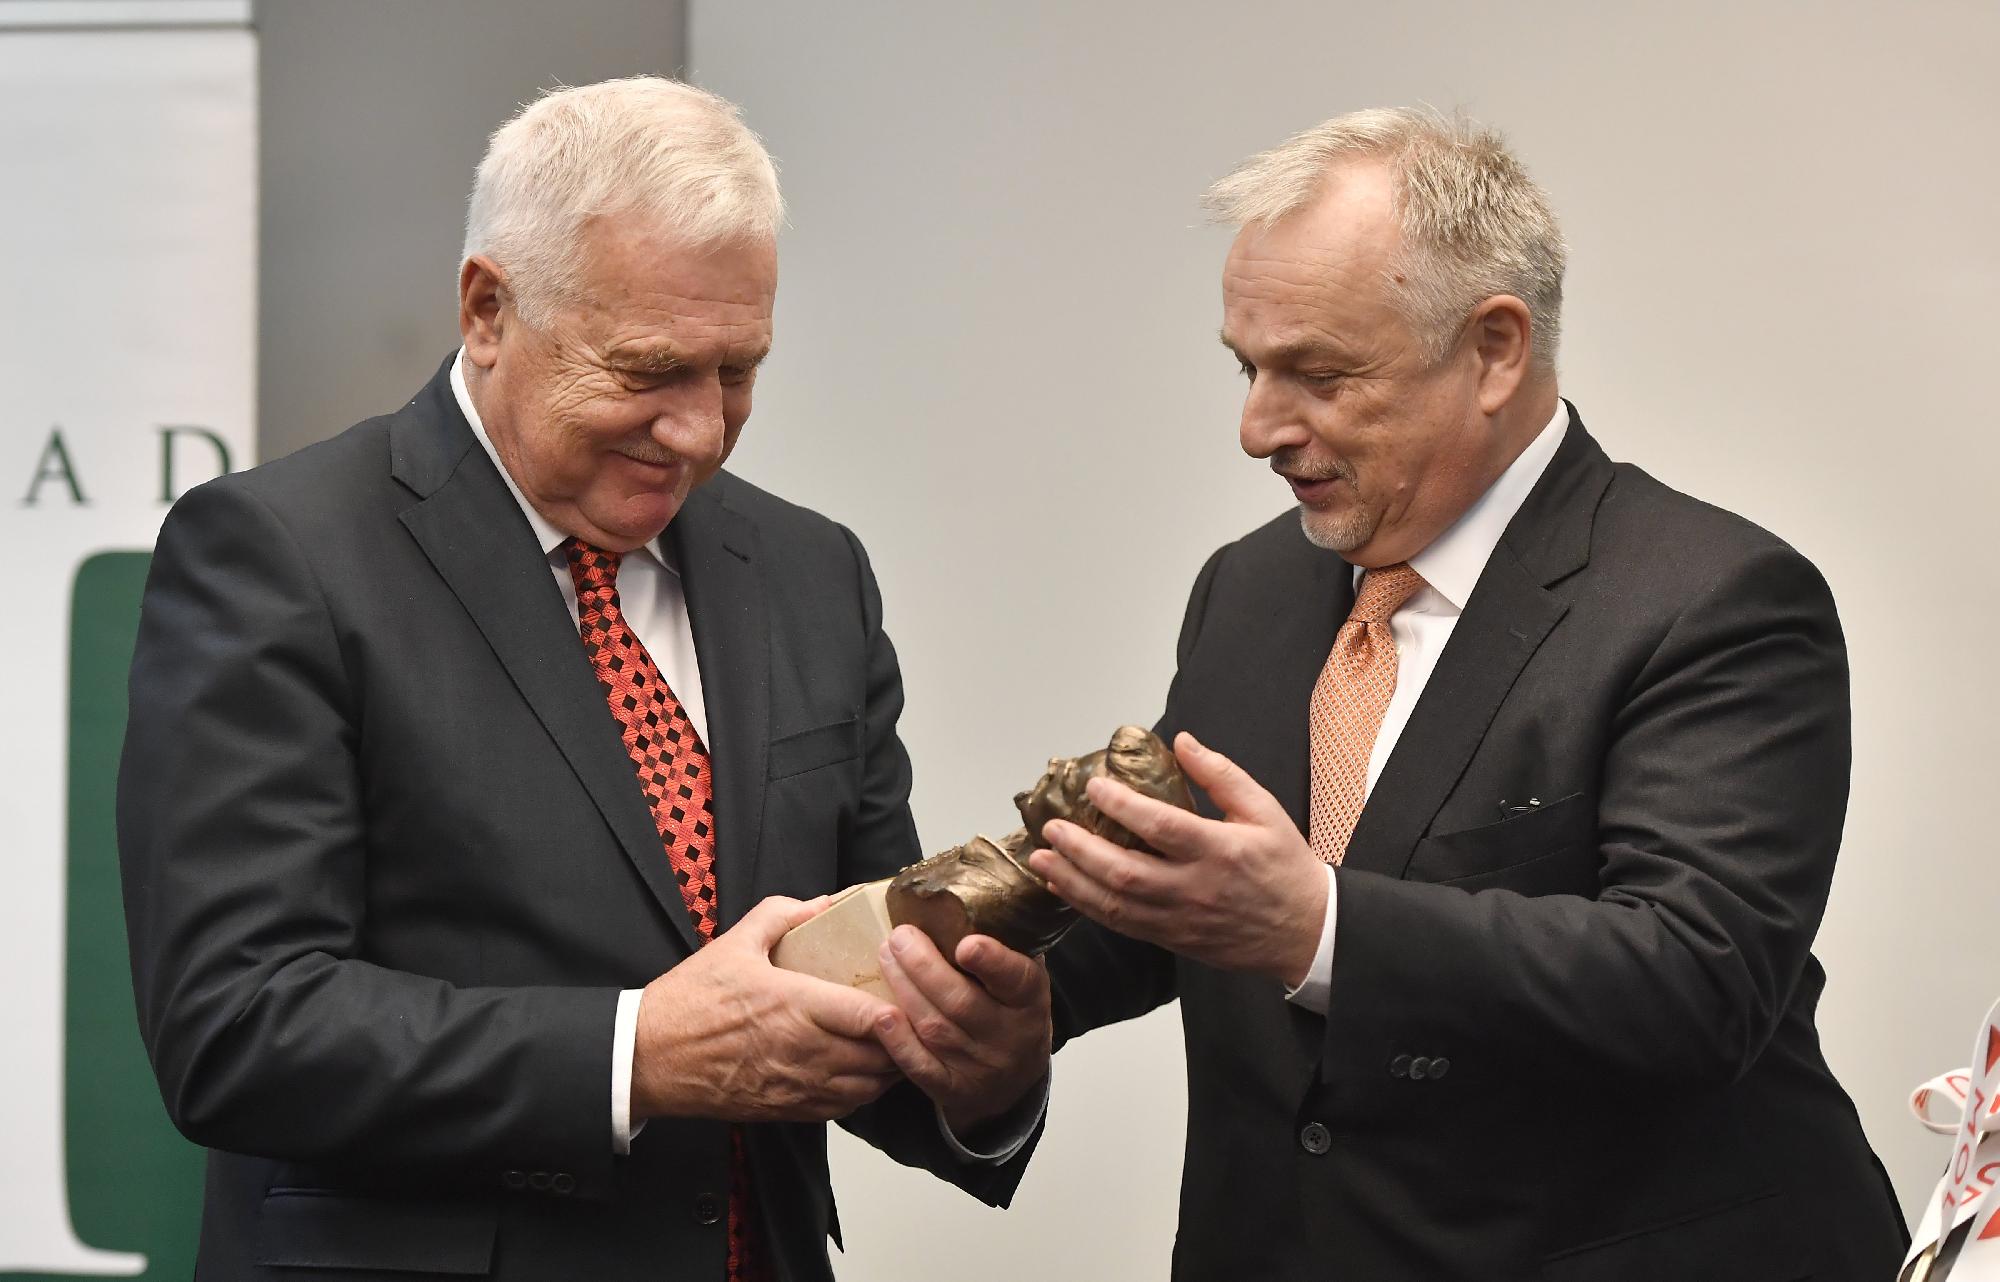 Václav Klaus kapta a Petőfi-díjat